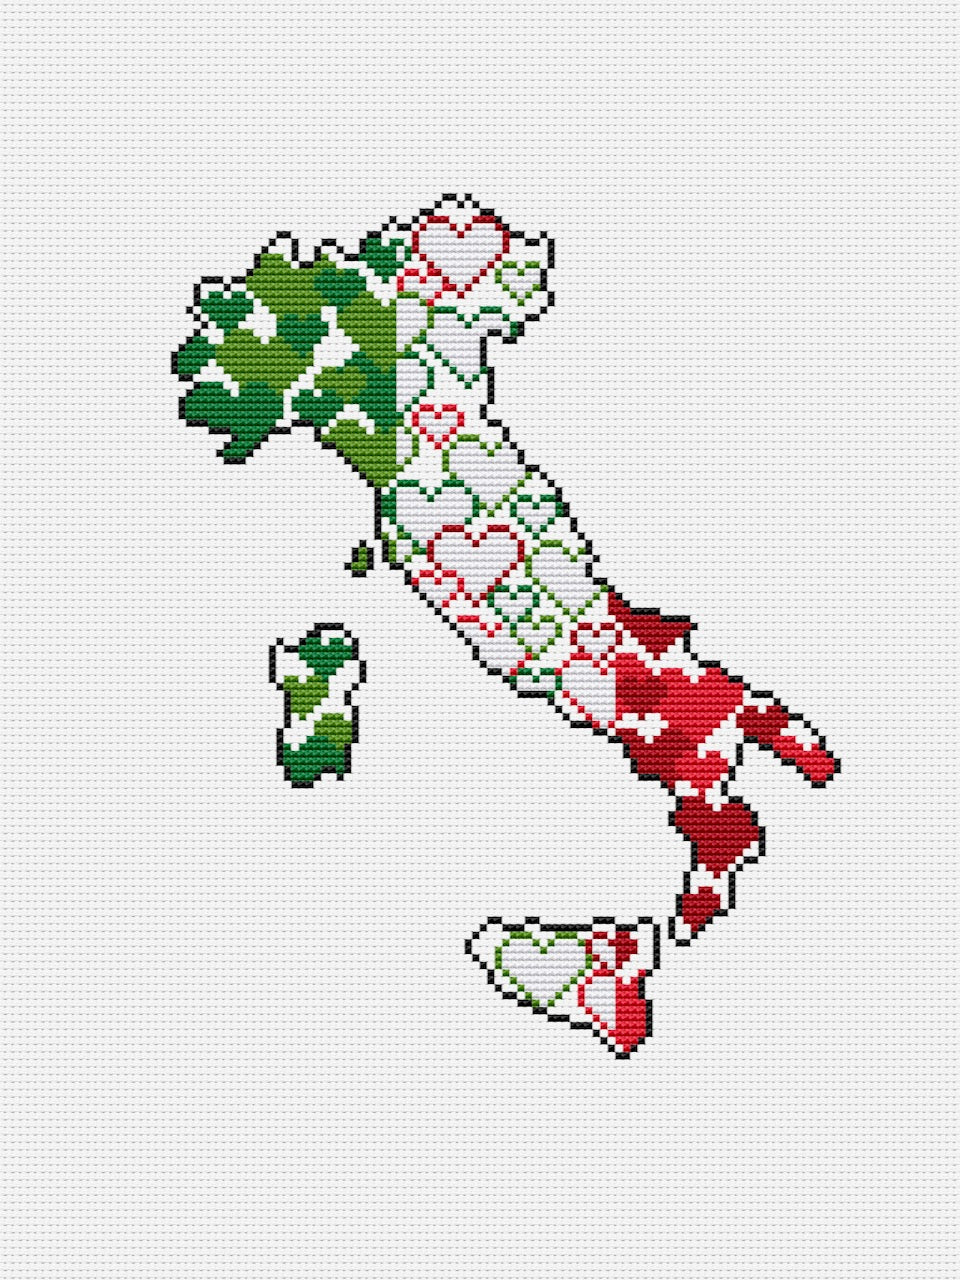 Italy cross stitch pattern